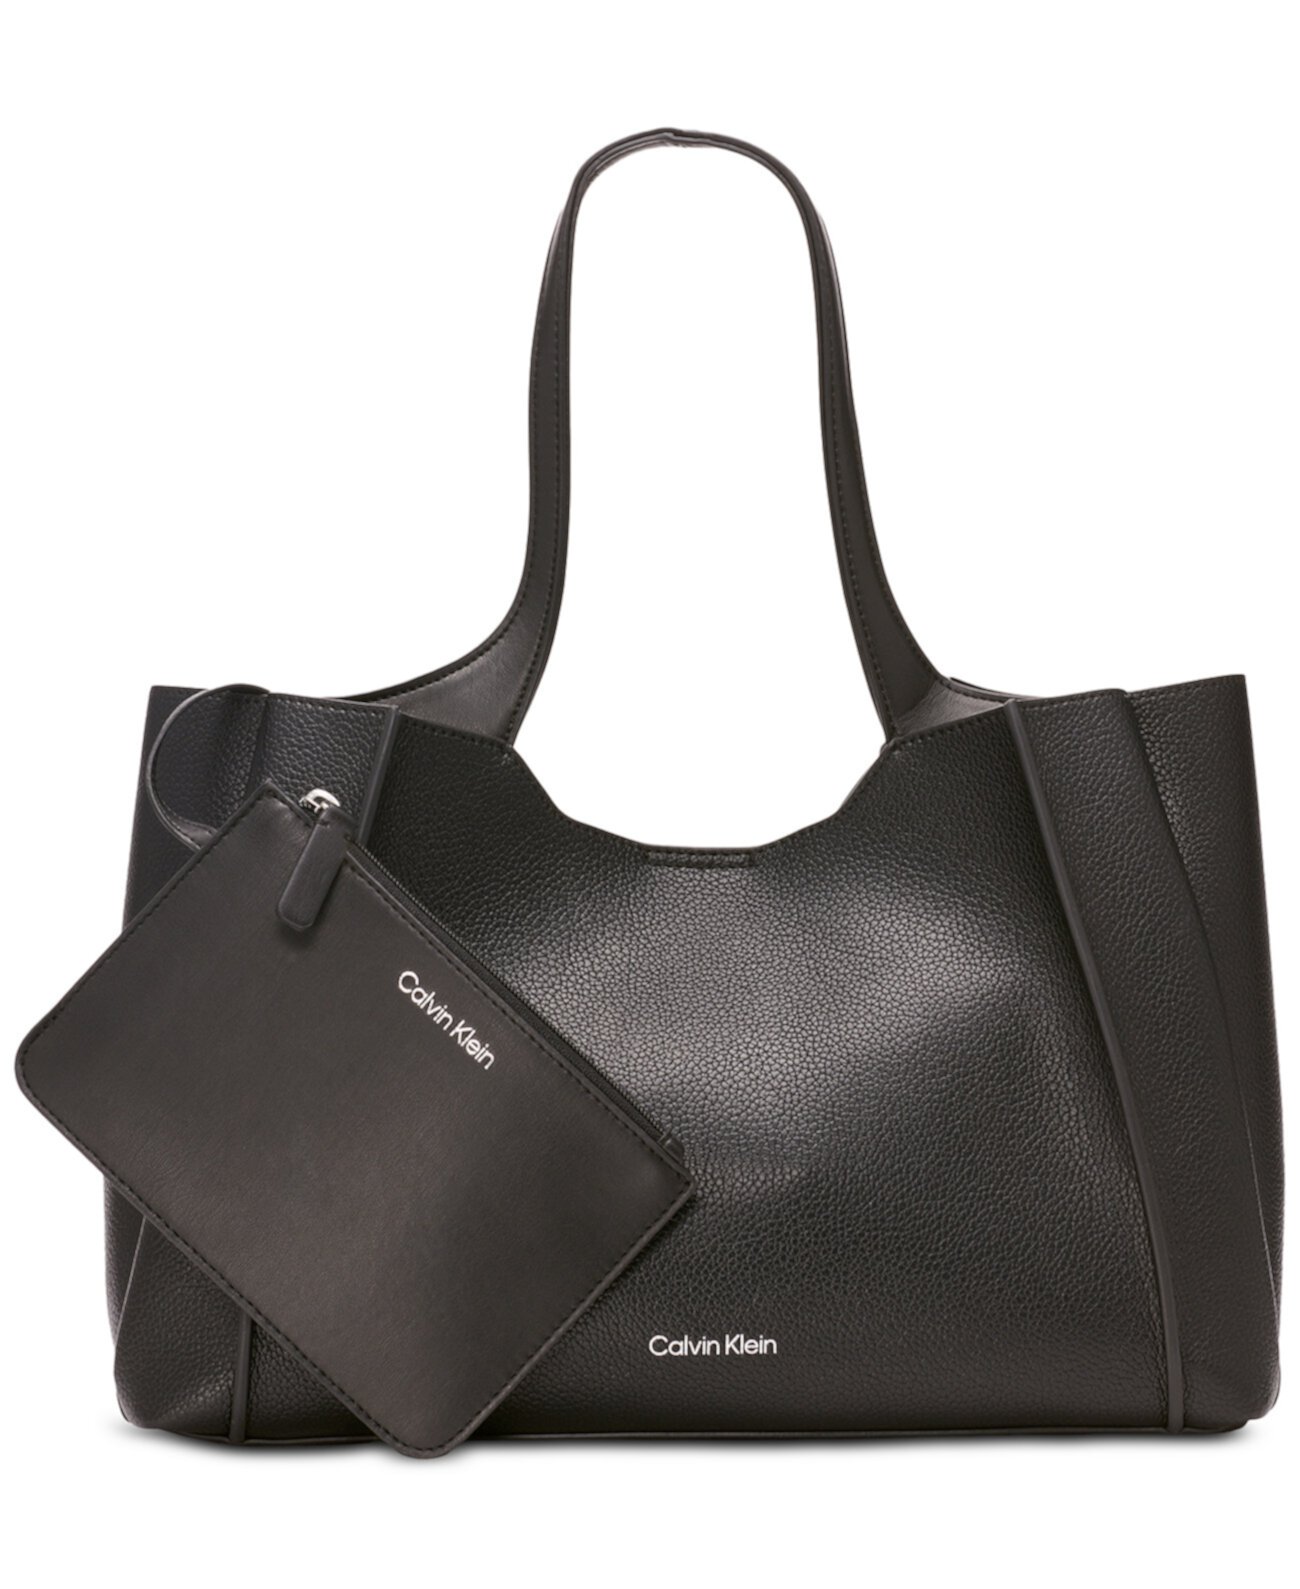 Большая сумка Sahara со съемным мешочком Calvin Klein